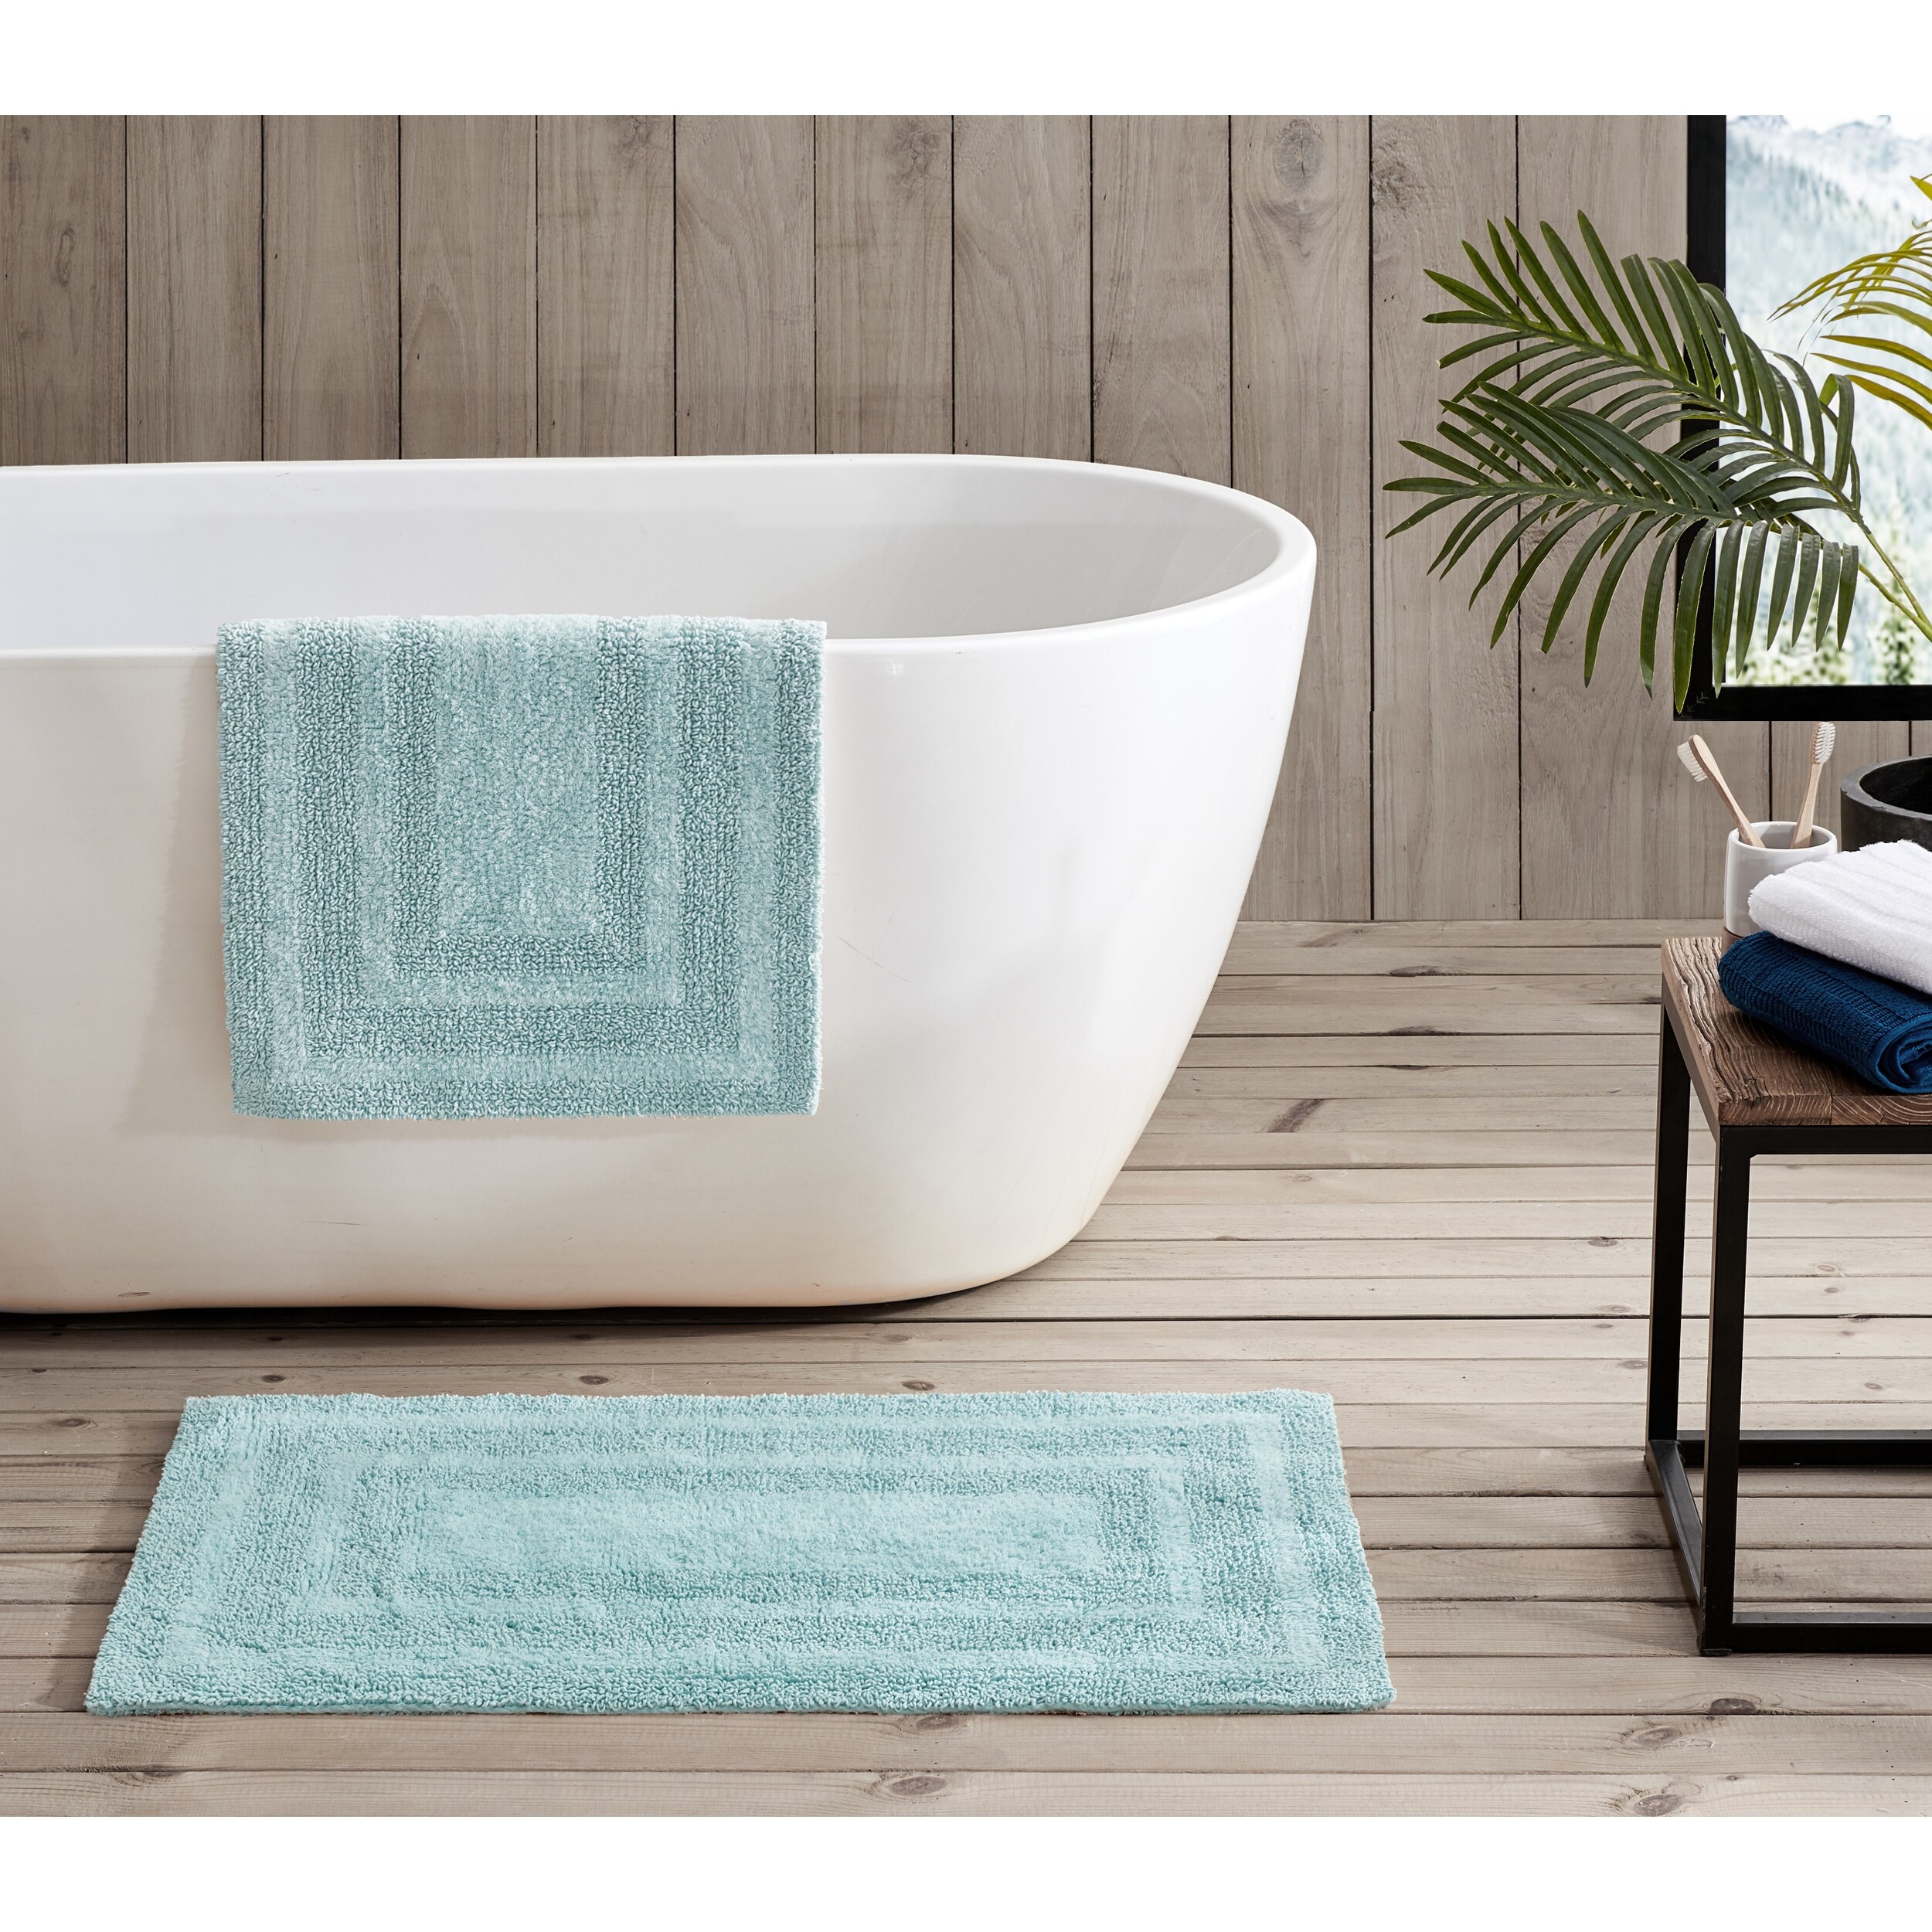 Turquoize Bath Rug Runner for Bathroom 59 inchx 20 inch Extra Large Navy Blue Striped Bath Mat Runner Slid Resistant Oversize Non-Slip Bathroom Rugs Shag Area